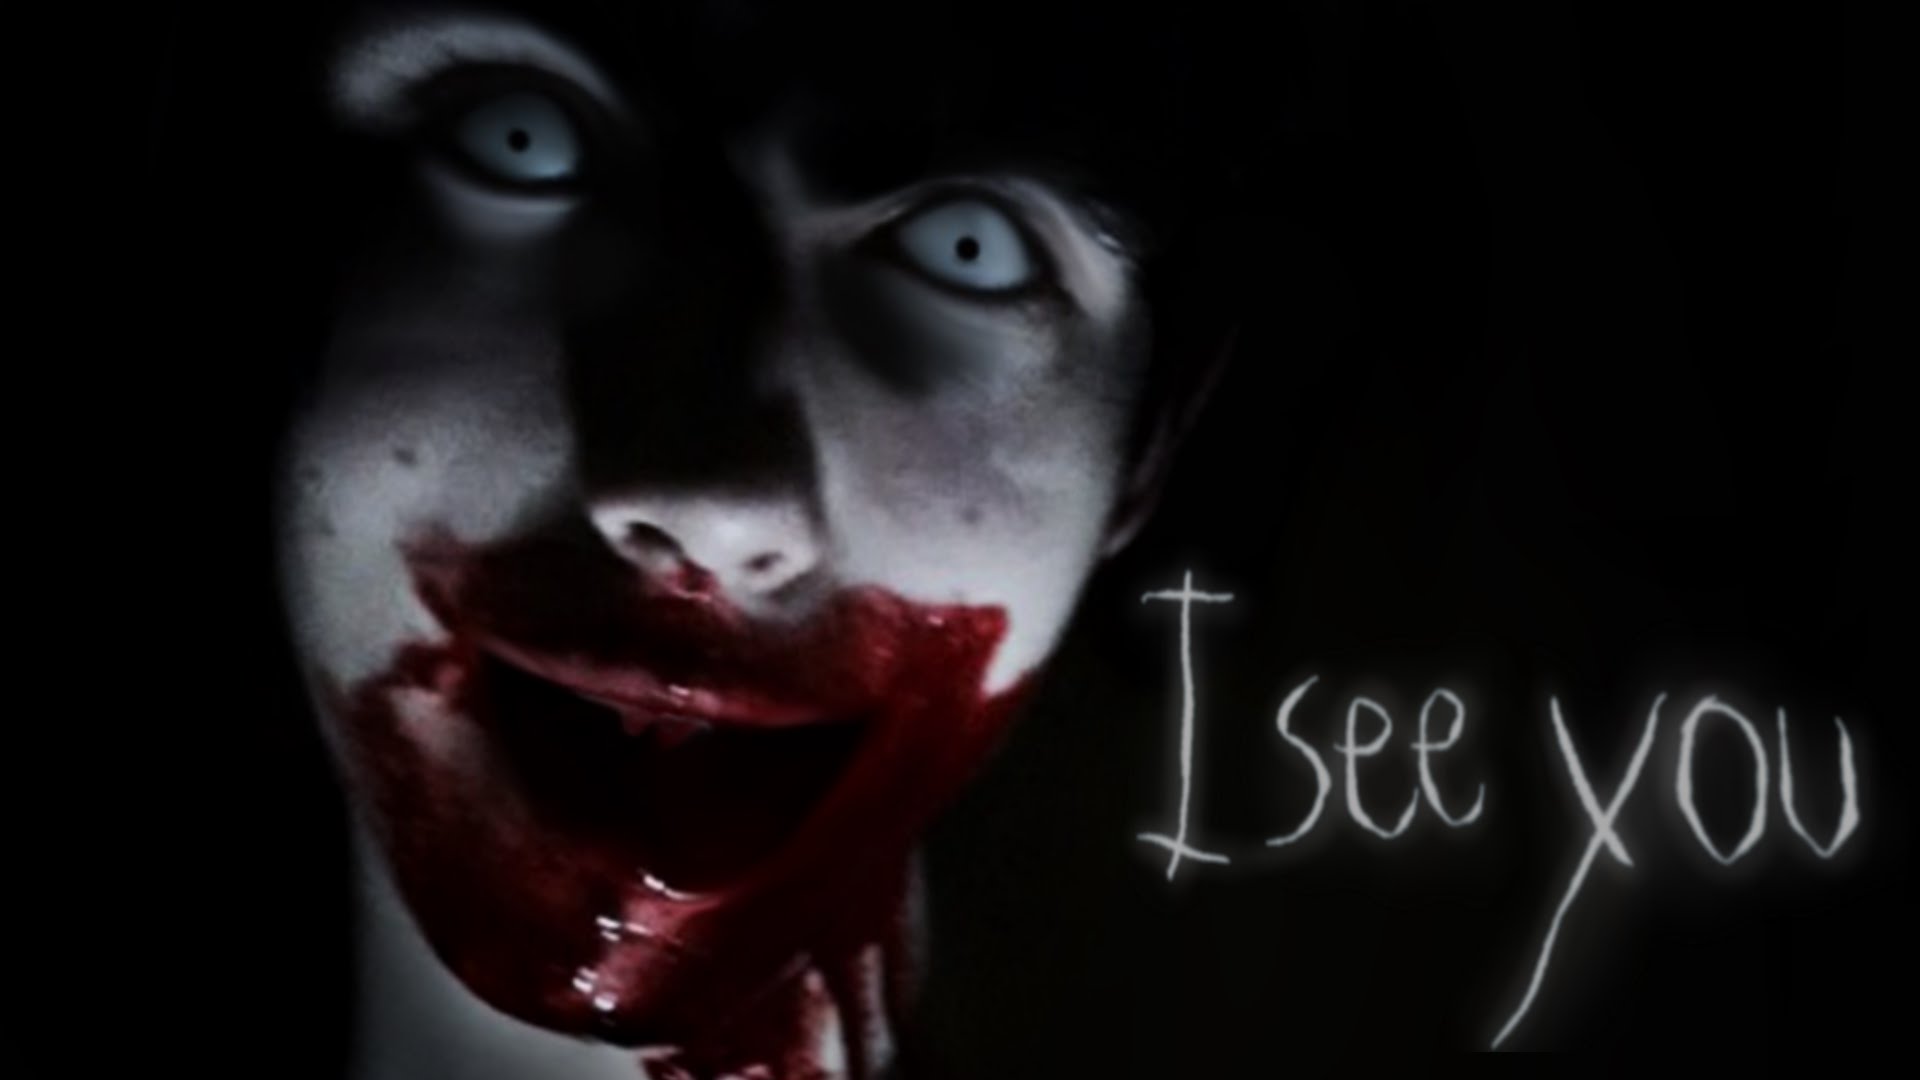 I SEE YOU - Horror Short Film - YouTube